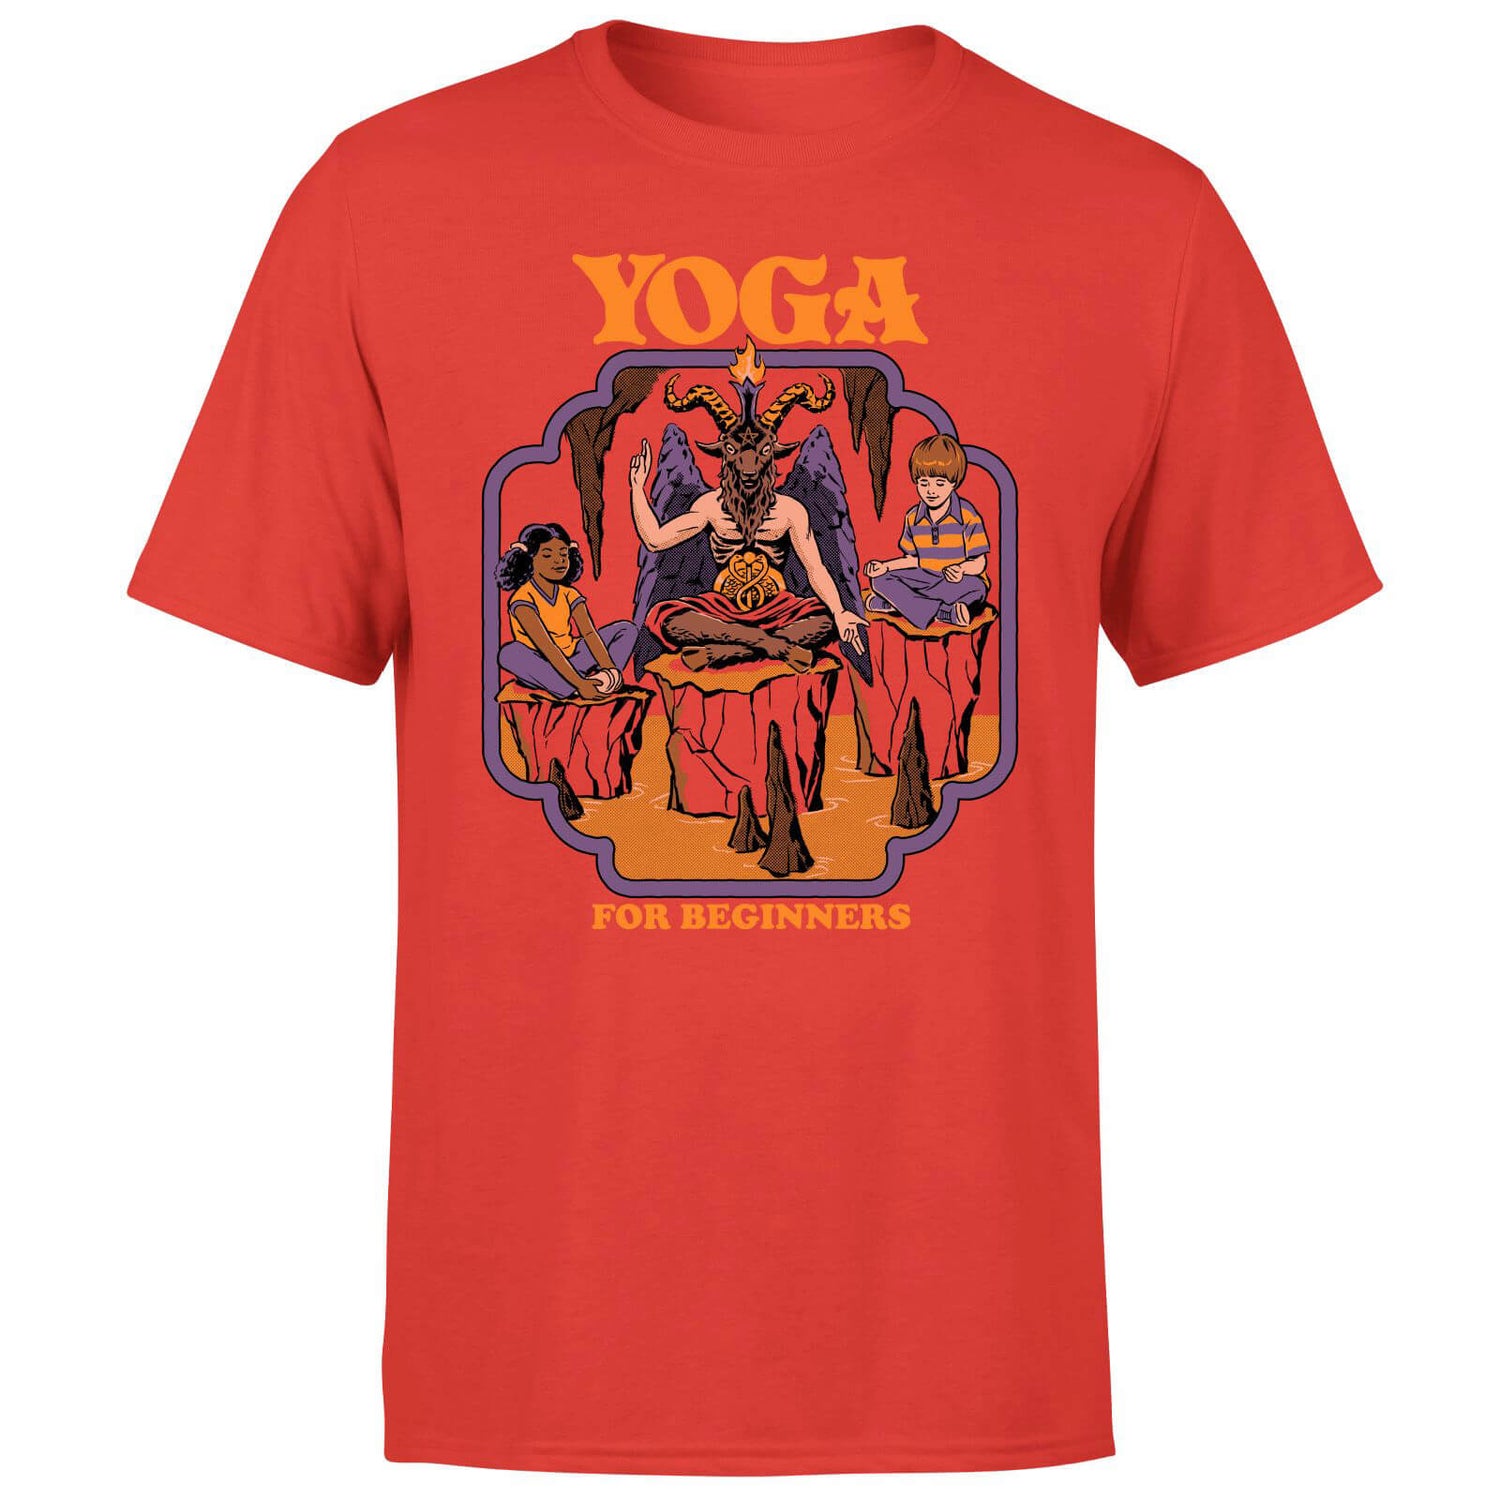 Yoga For Beginners Men's T-Shirt - Red